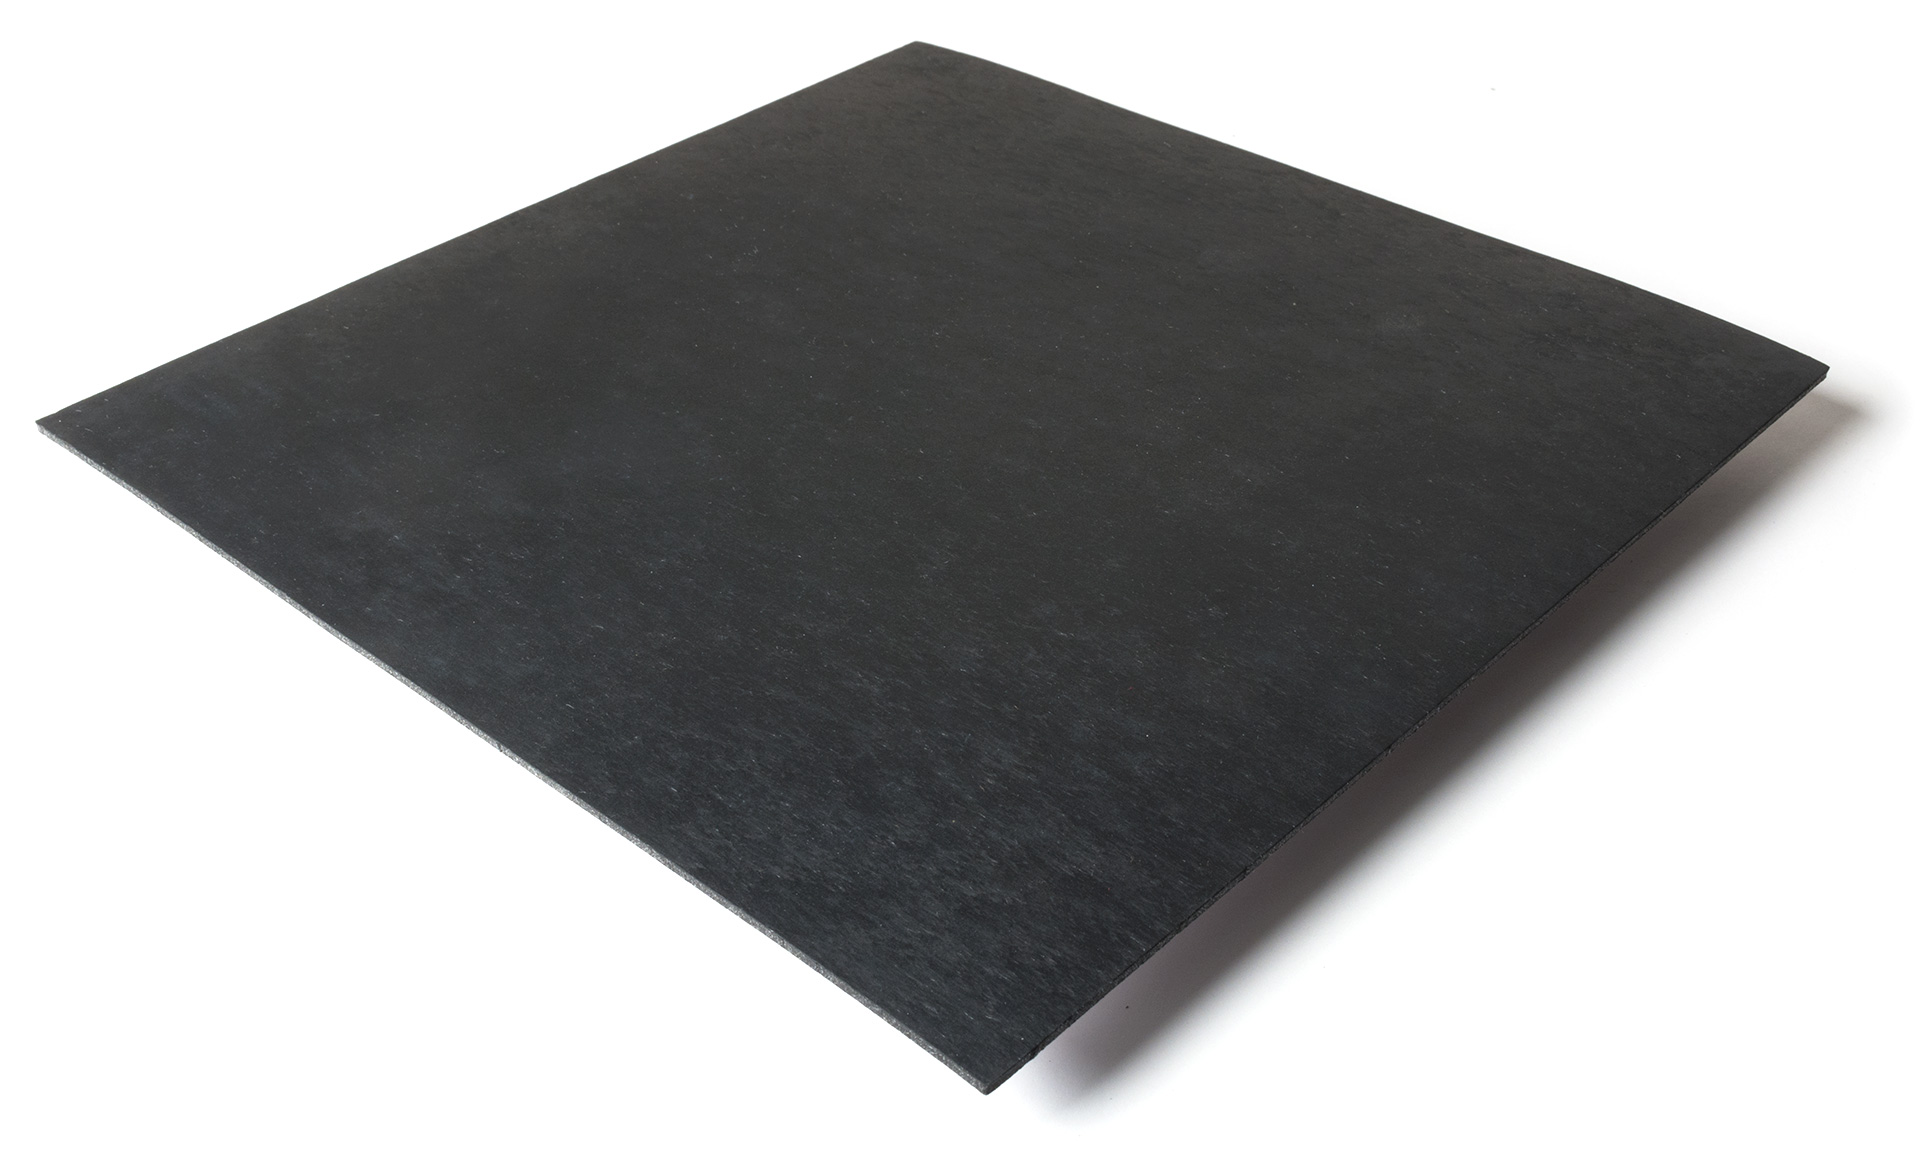 Standard transit flooring in black, smooth